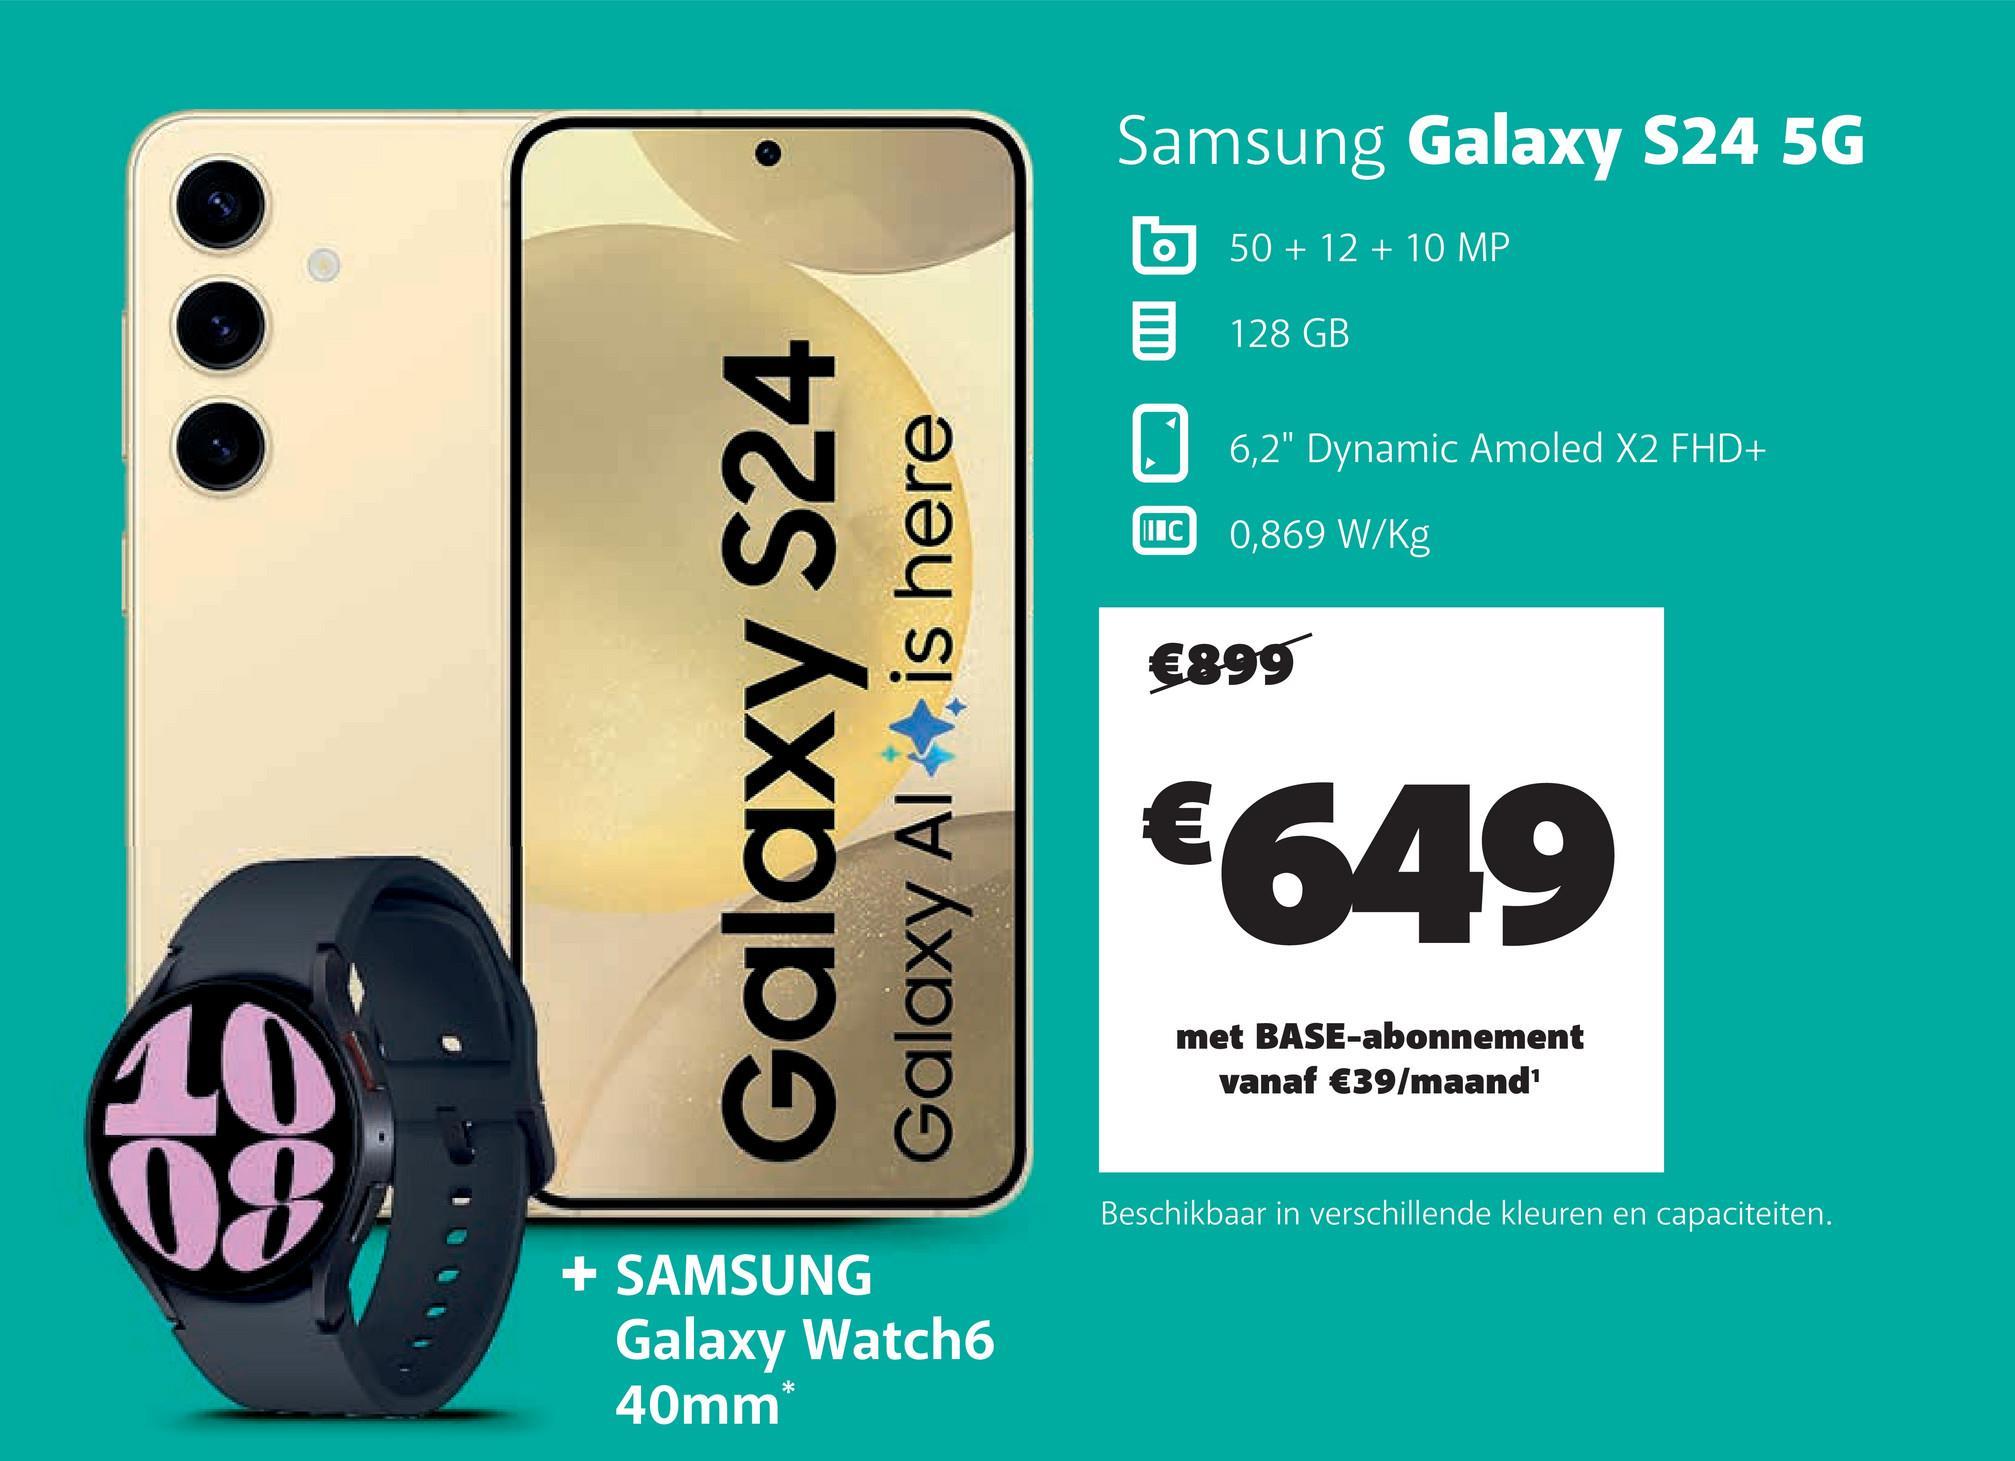 Galaxy S24
Galaxy Al
is here
Samsung Galaxy S24 5G
II C
50+12+10 MP
128 GB
6,2" Dynamic Amoled X2 FHD+
0,869 W/Kg
€899
€649
10
49
+ SAMSUNG
Galaxy Watch6
40mm*
met BASE-abonnement
vanaf €39/maand¹
Beschikbaar in verschillende kleuren en capaciteiten.